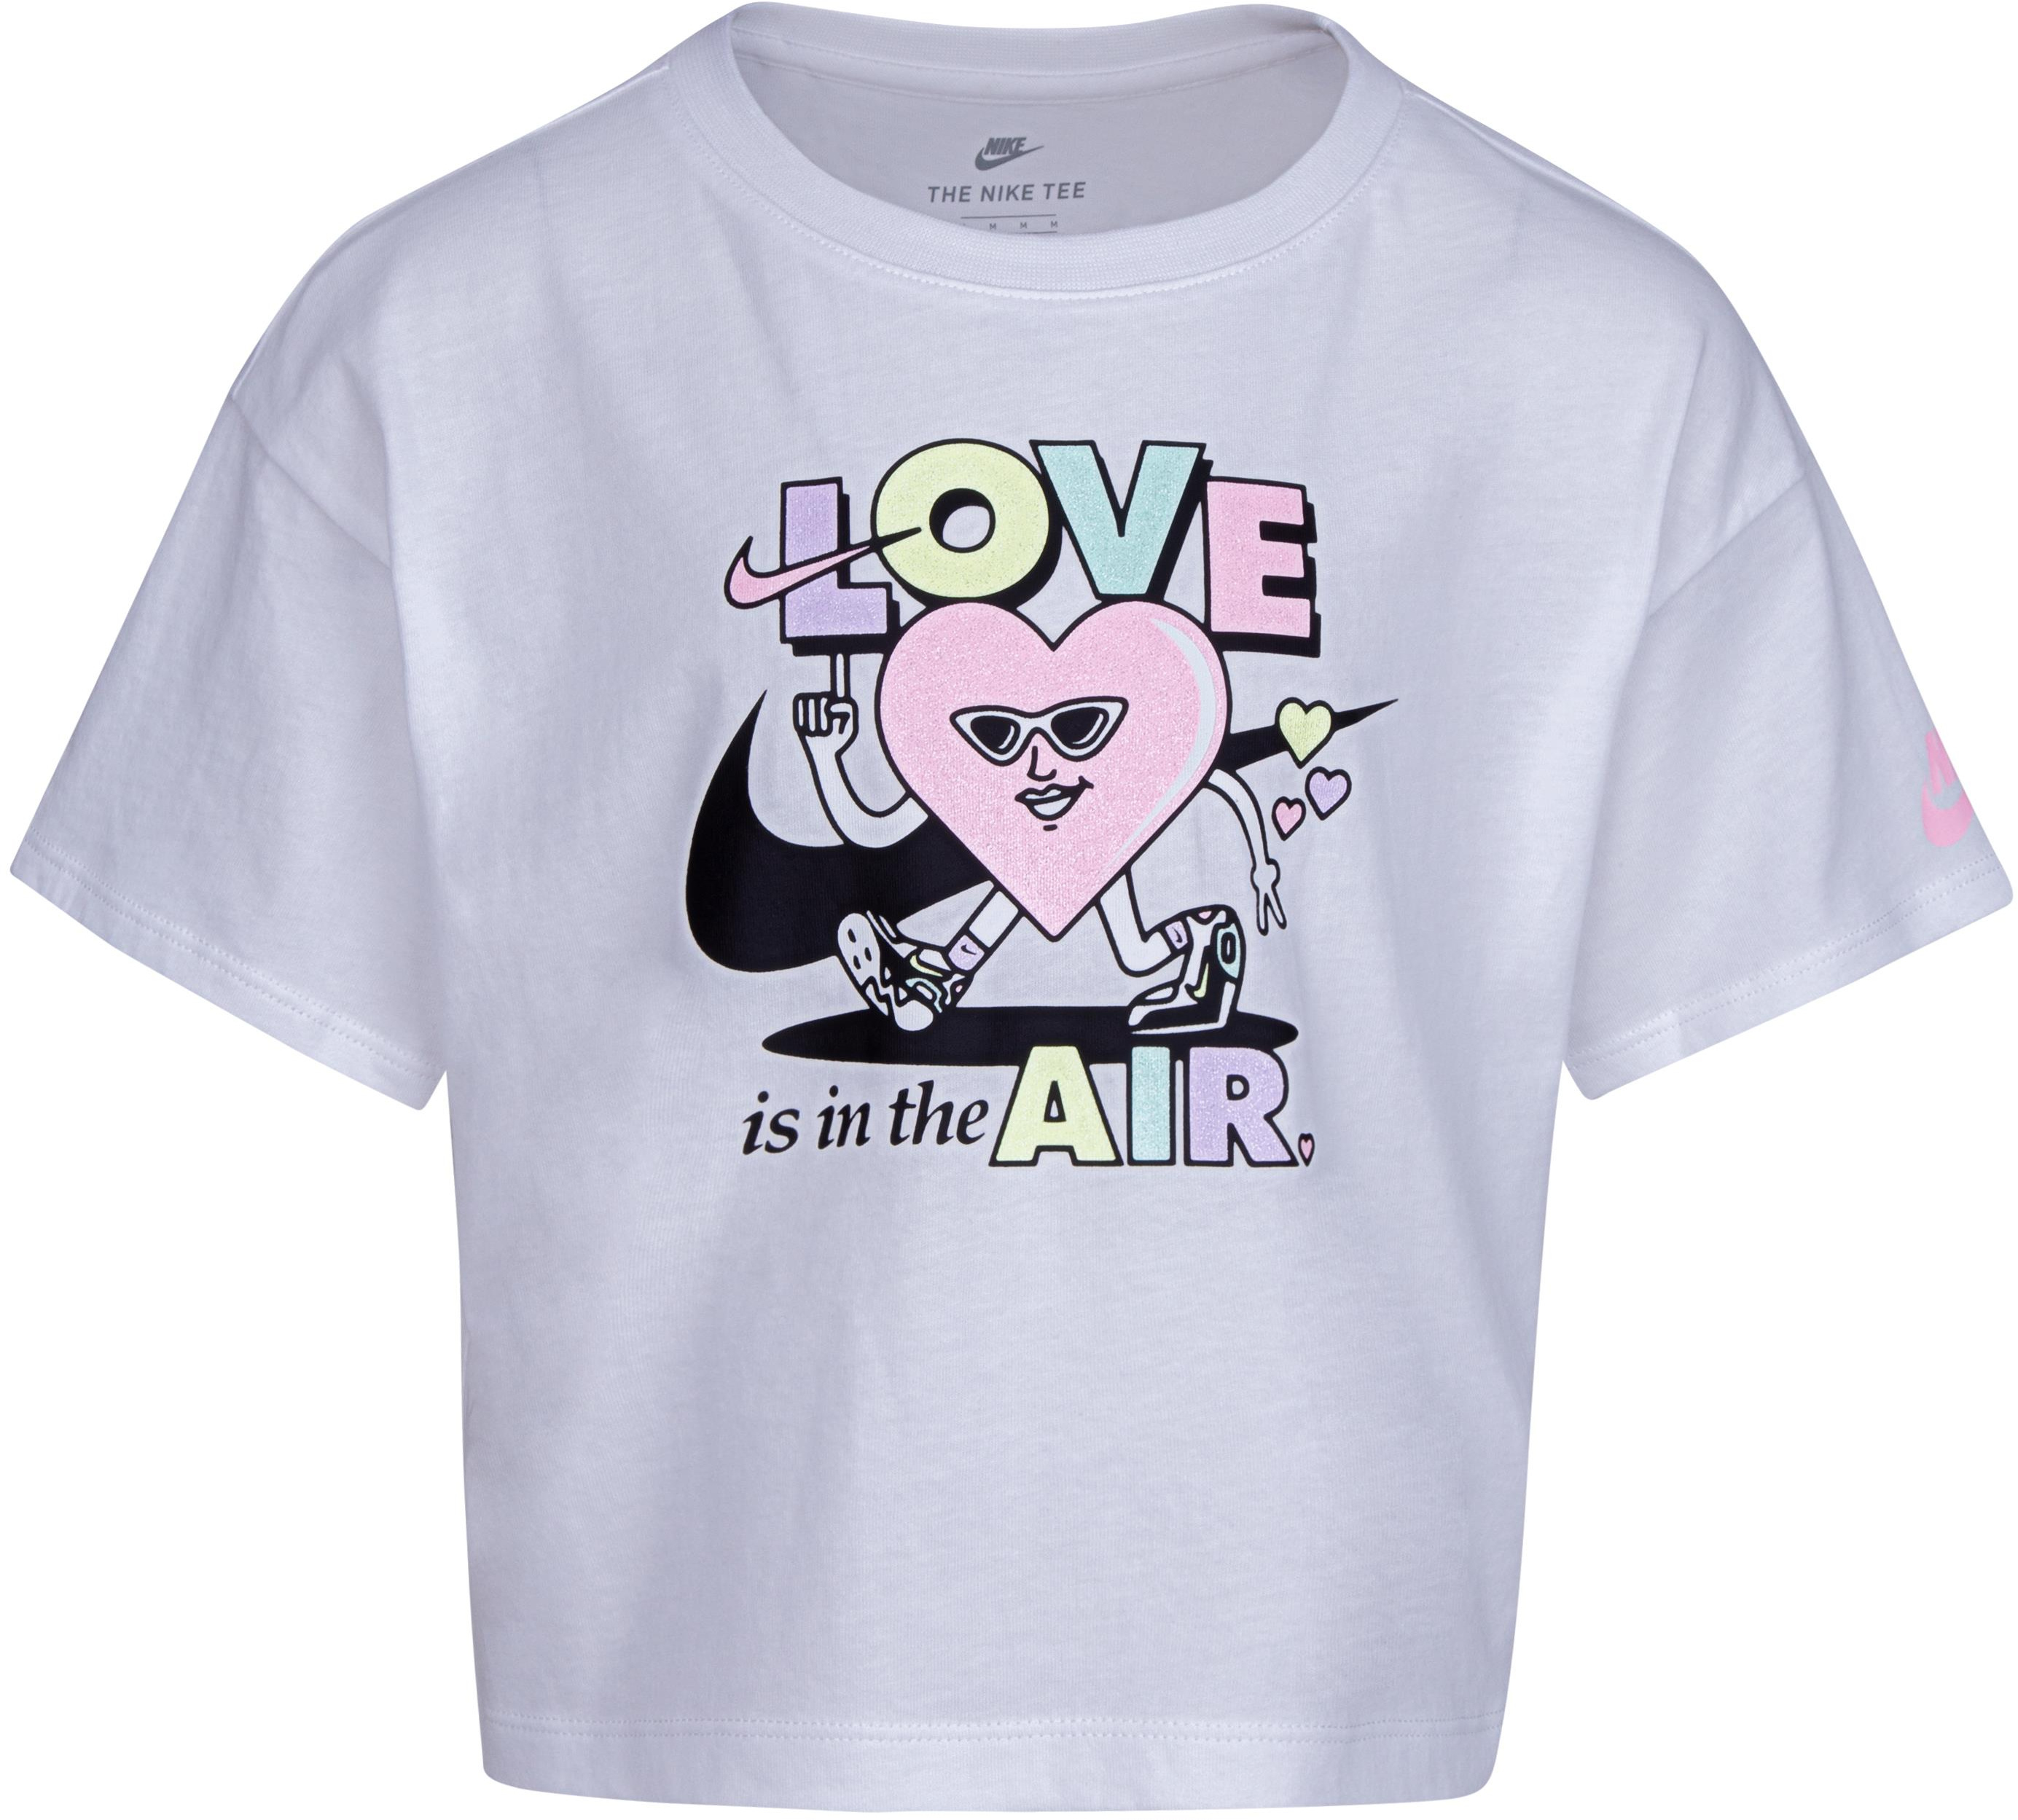 I love air. Nike Love футболка. Nike Love is in the Air. Love in the Air футболка. Футболка найк АИР белая.